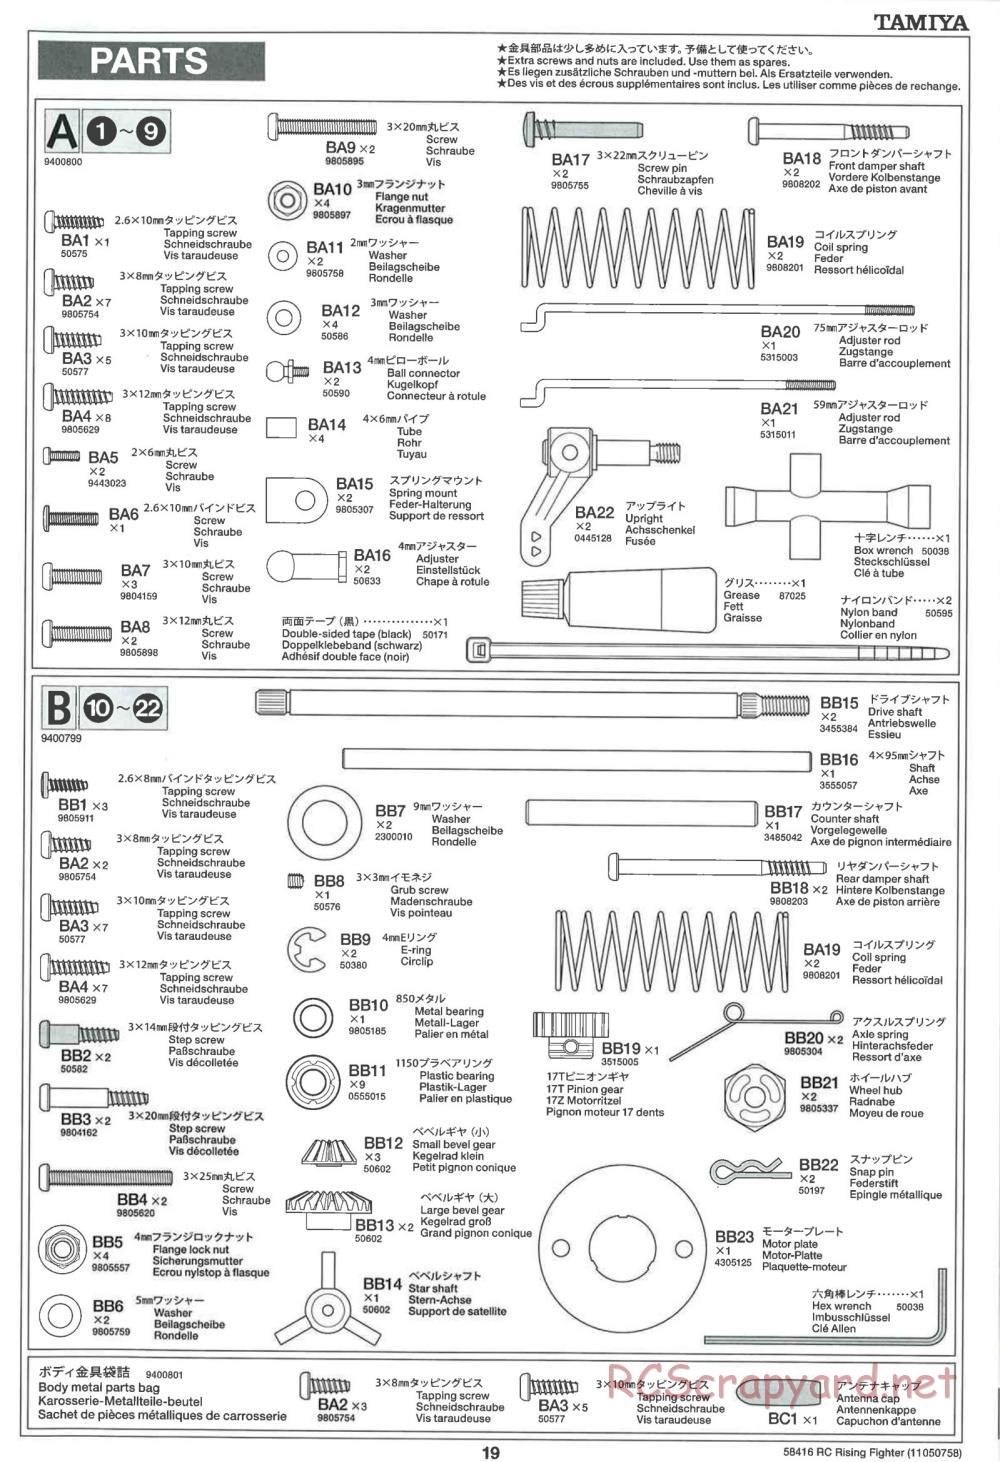 Tamiya - Rising Fighter Chassis - Manual - Page 19